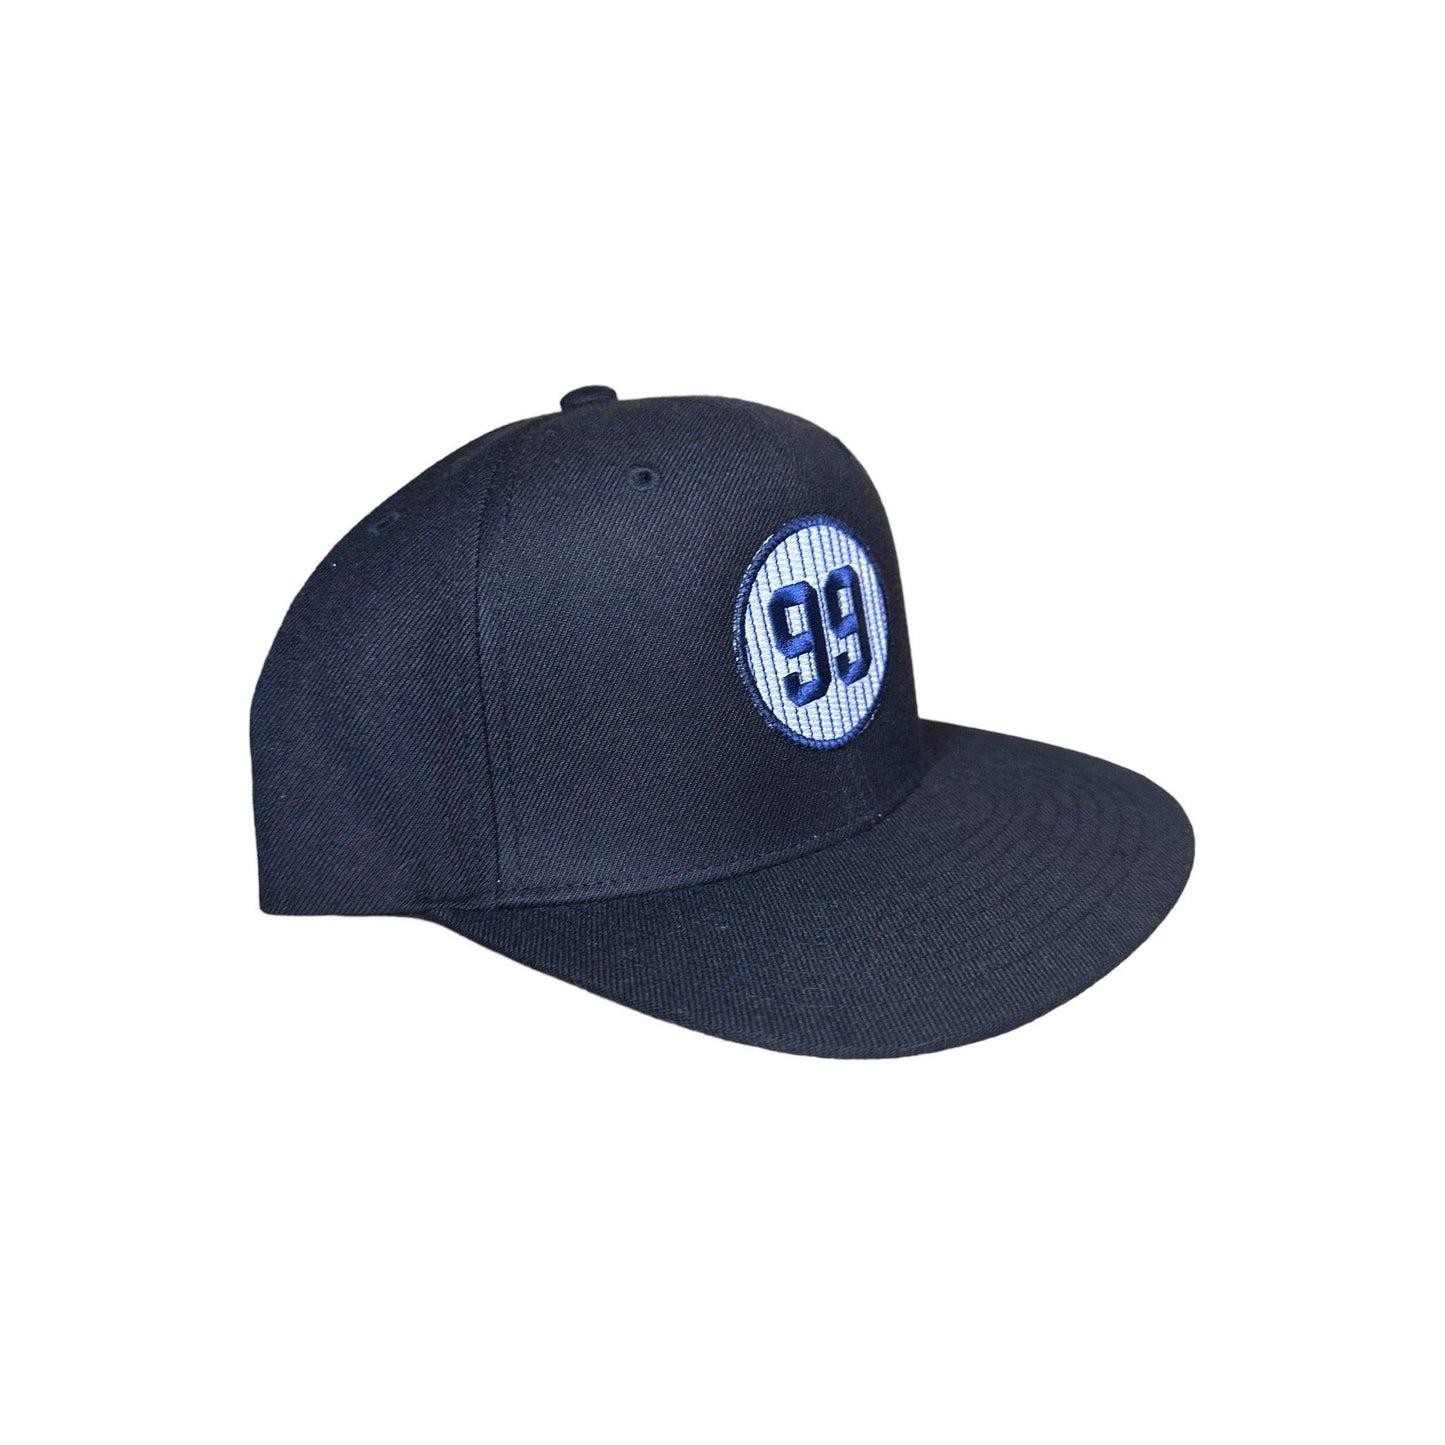 #99 Snapback Hat